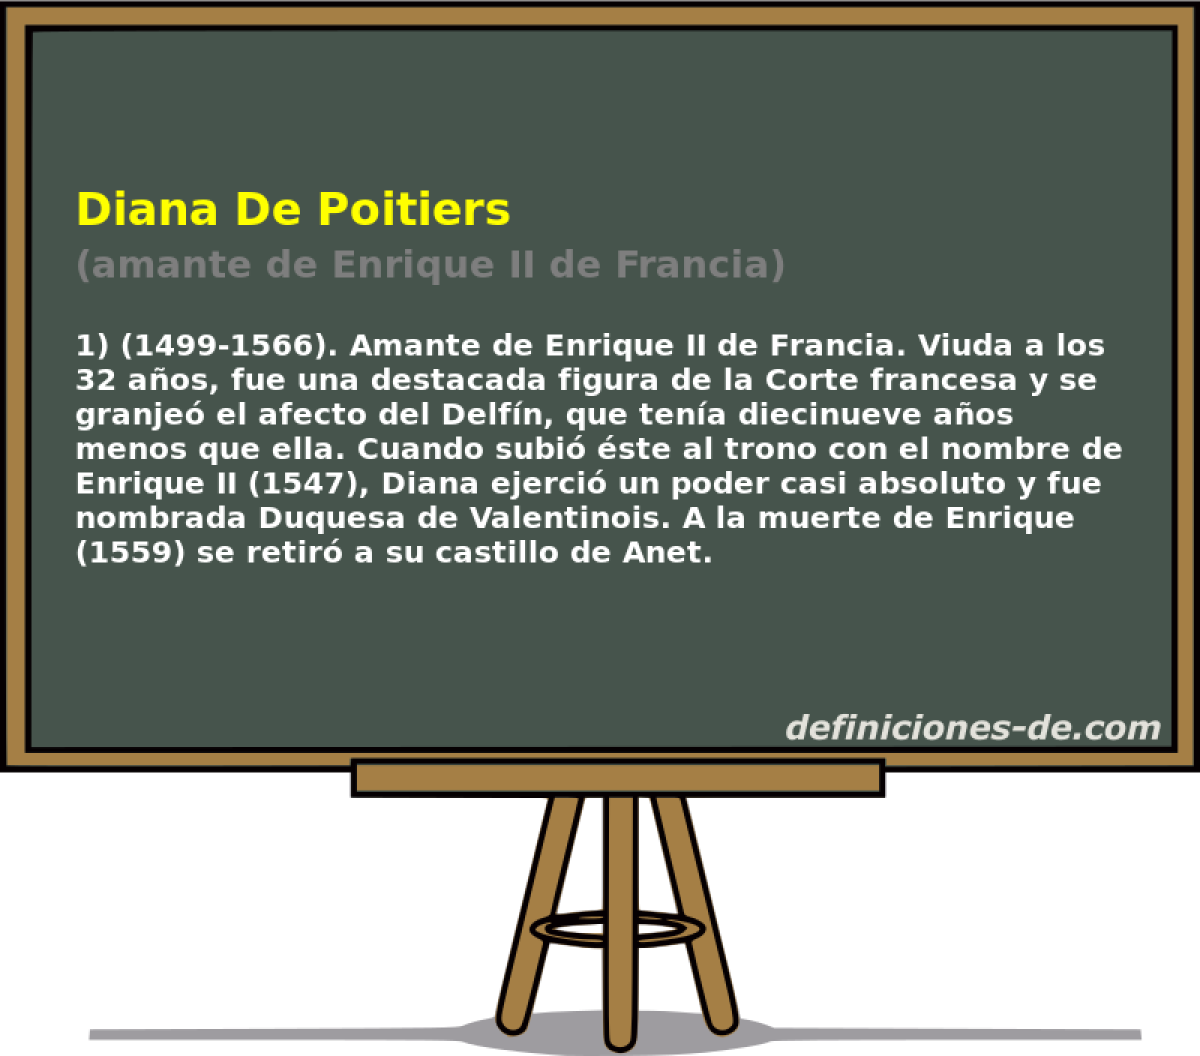 Diana De Poitiers (amante de Enrique II de Francia)